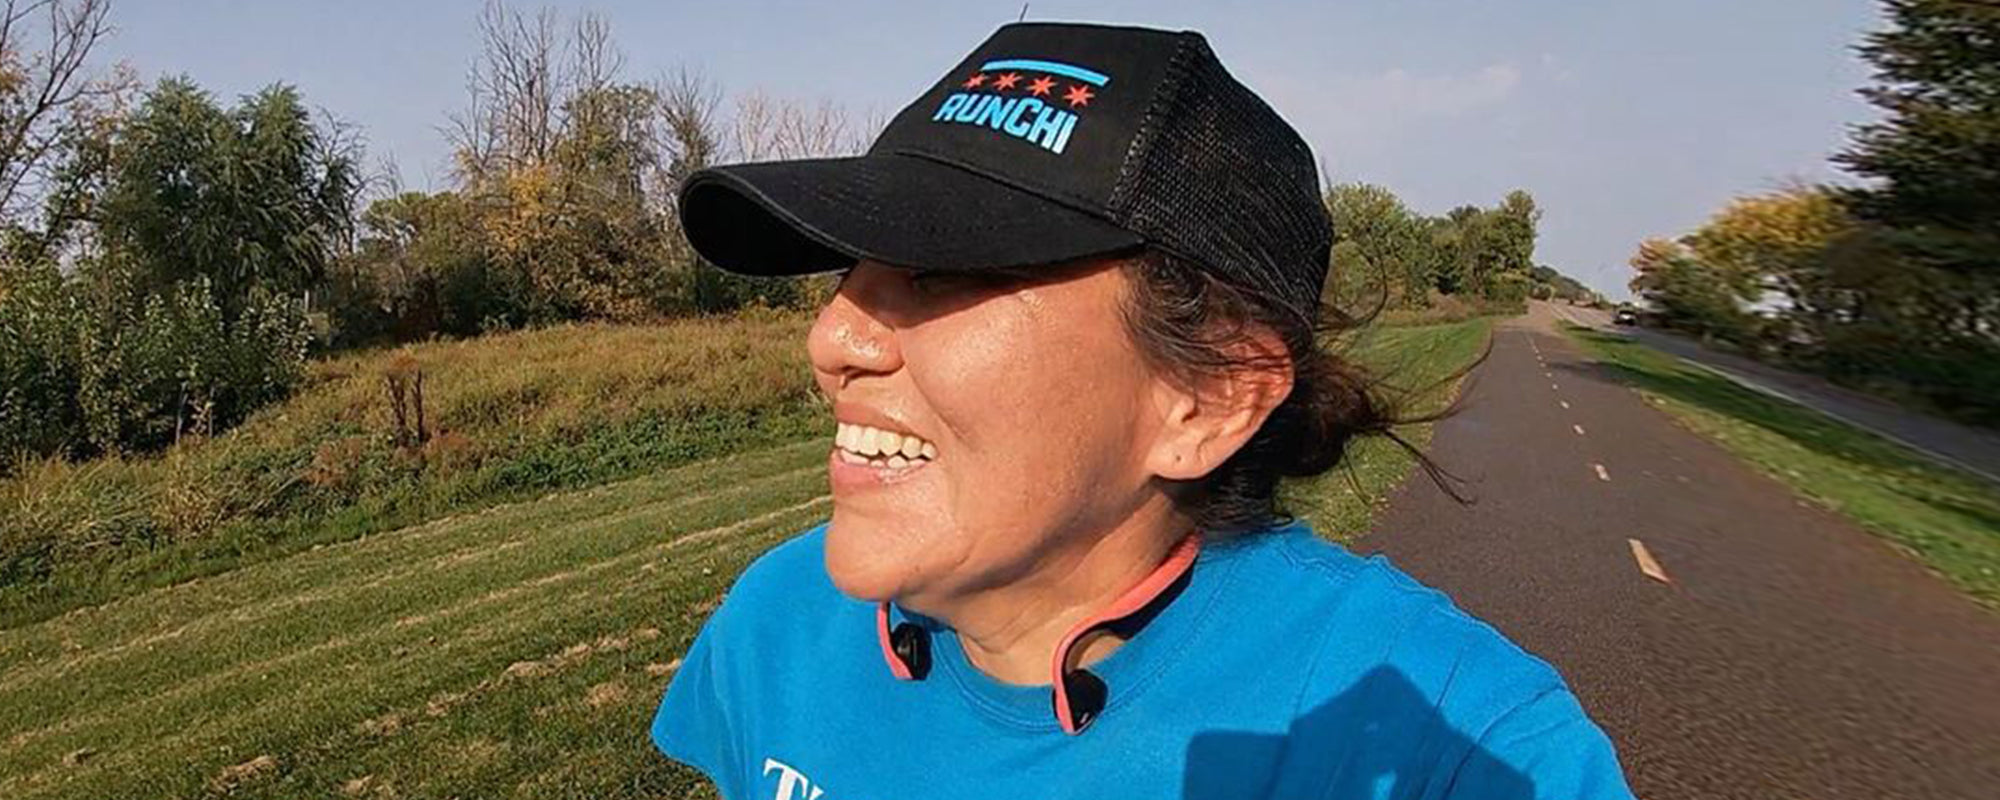 Navajo runner Verna wearing AfterShokz headphones while running